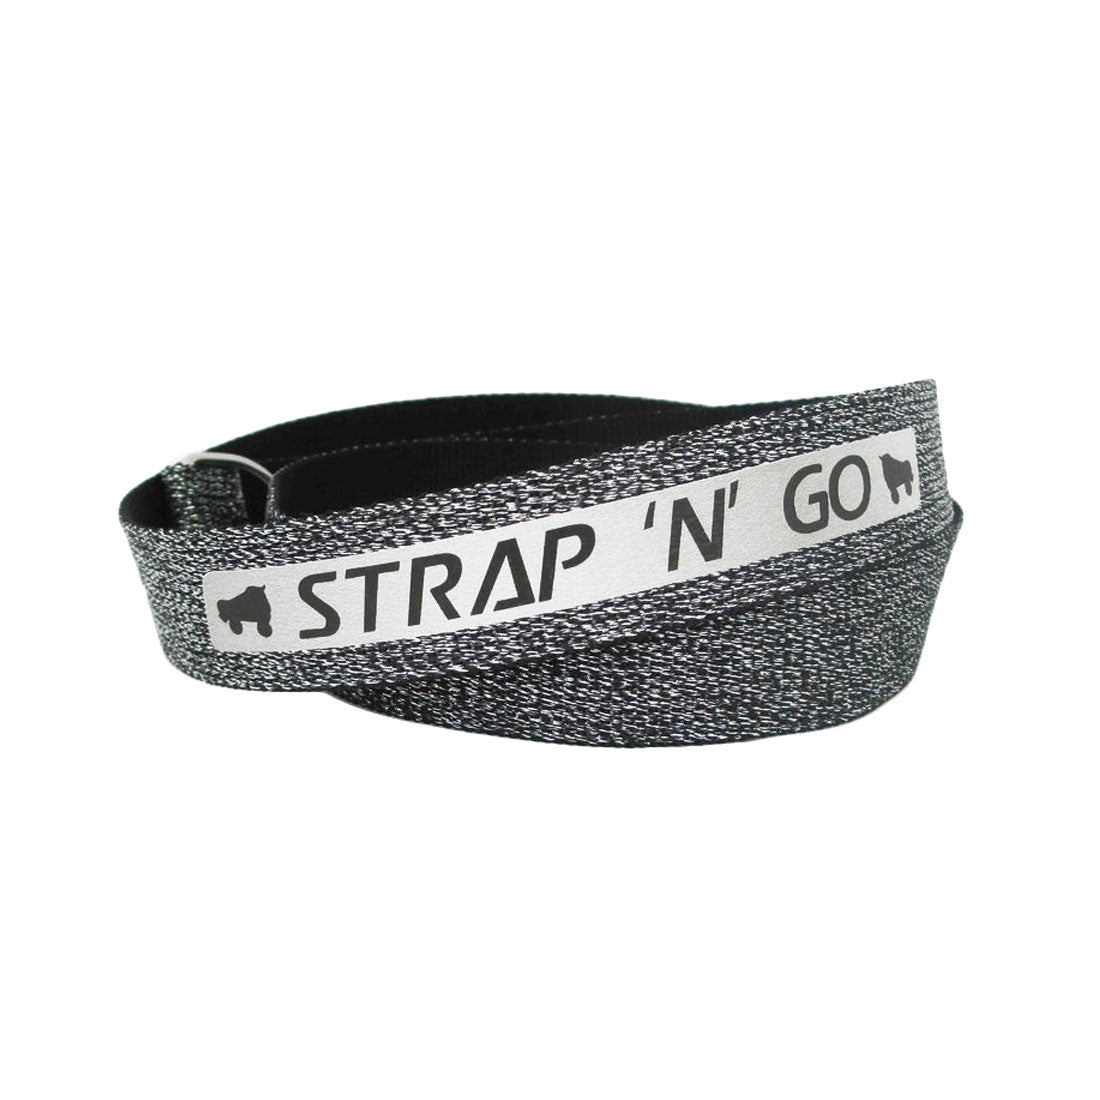 Strap N Go Skate Noose/Leash - Glitter Glitter Smoke Roller Skate Accessories